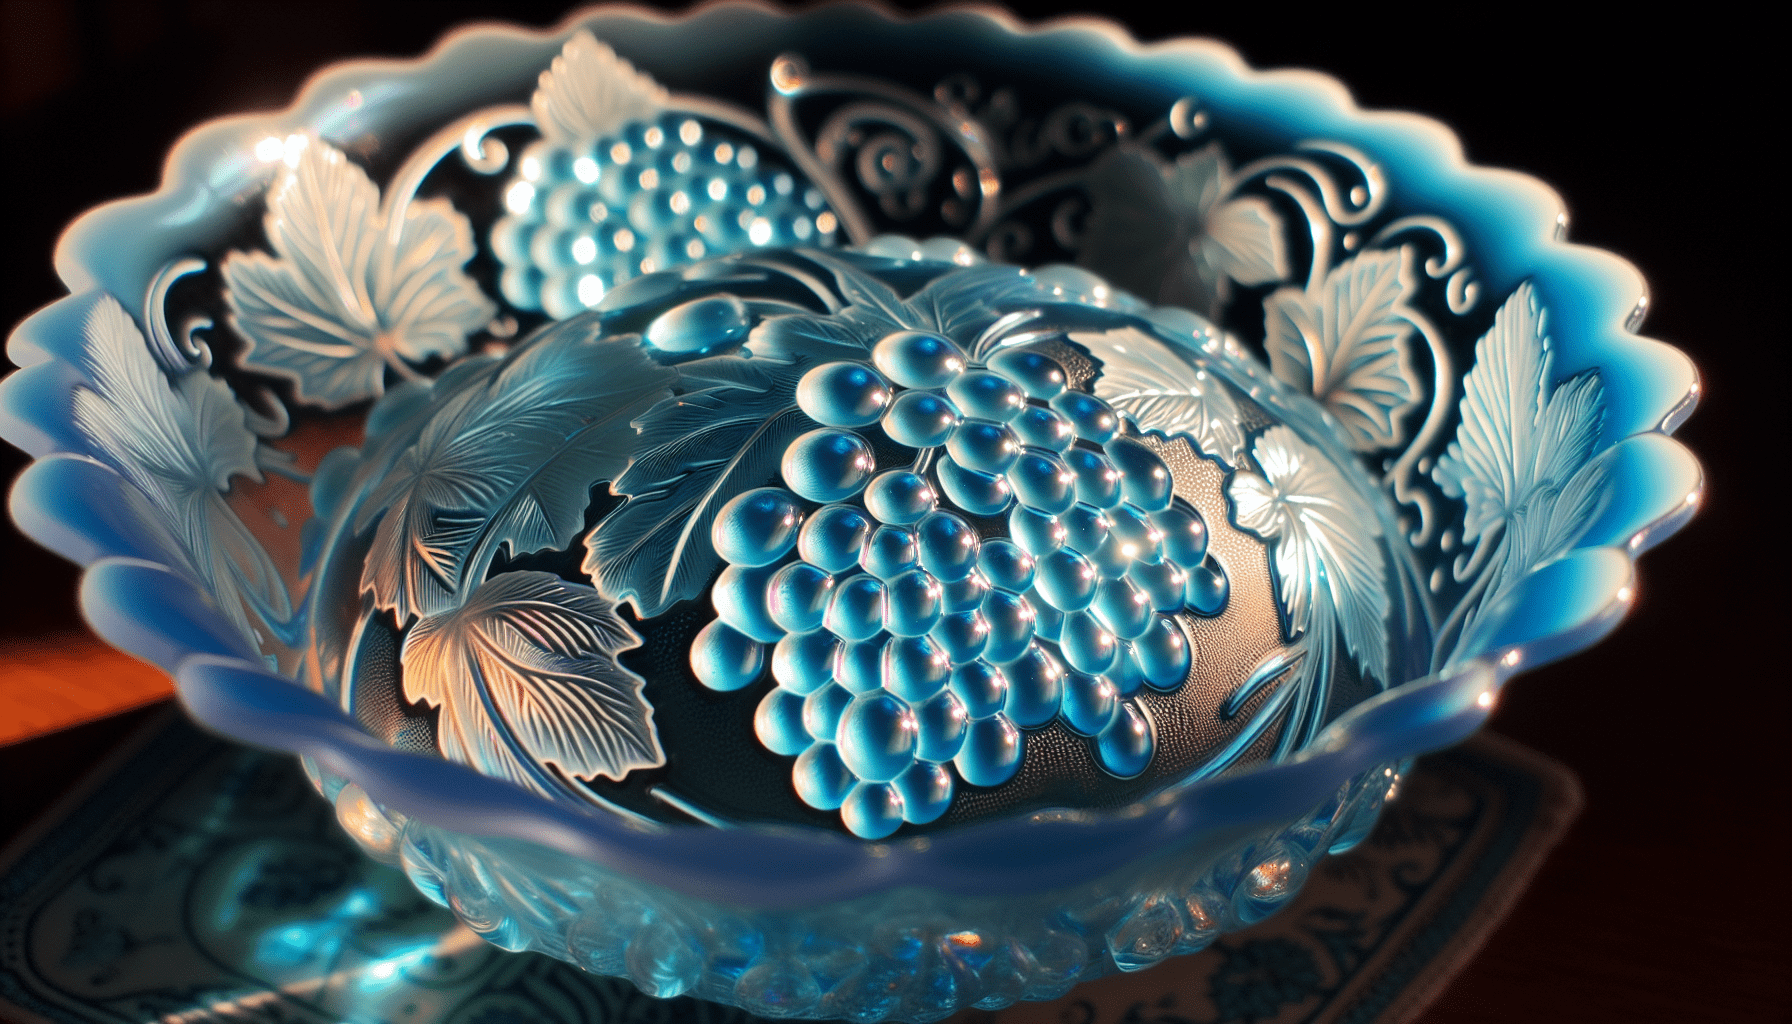 Harvest Grapes pattern on blue carnival glass bowl